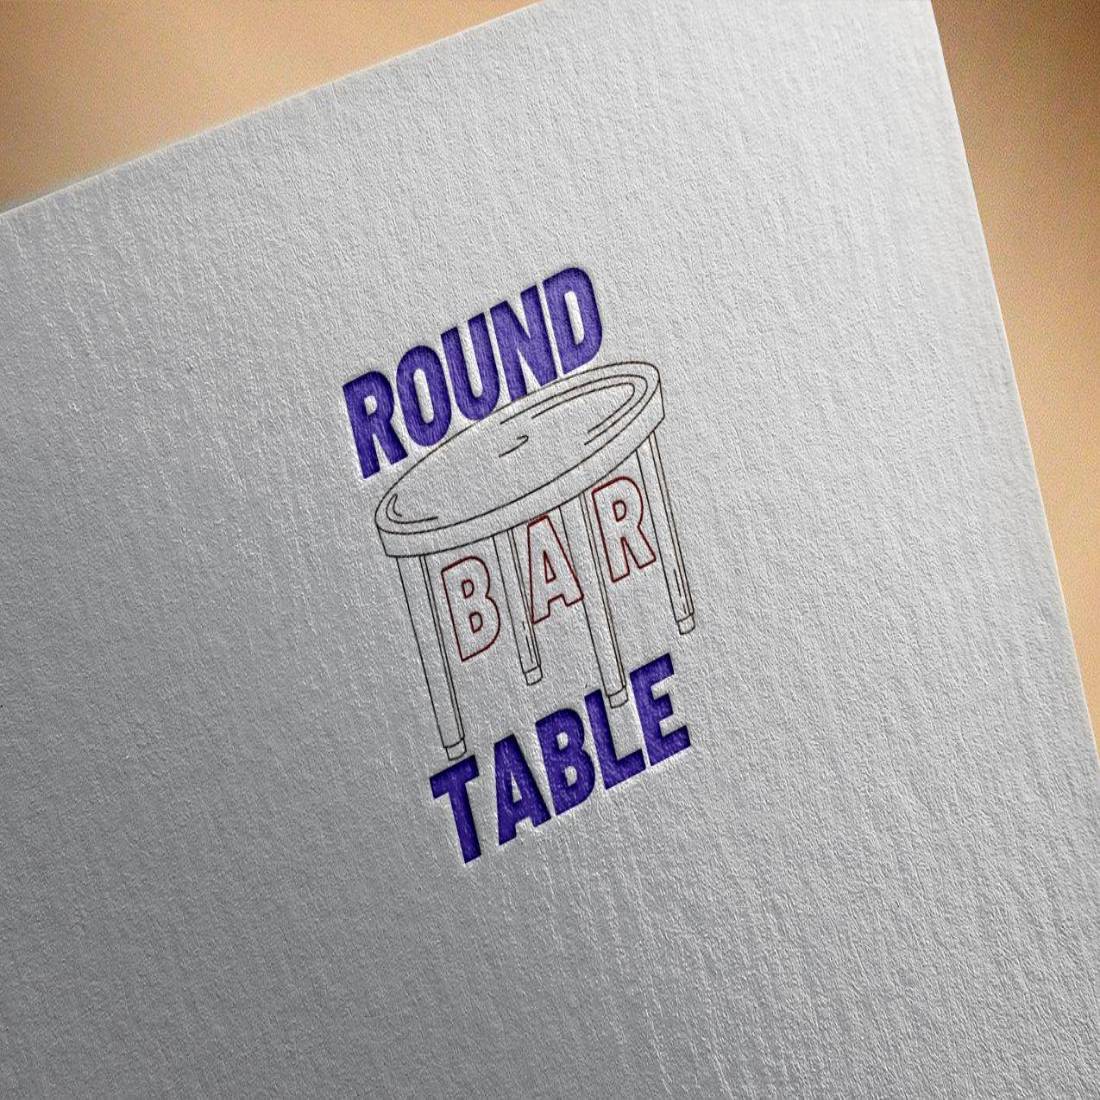 Bar Round Table Logo Design cover image.